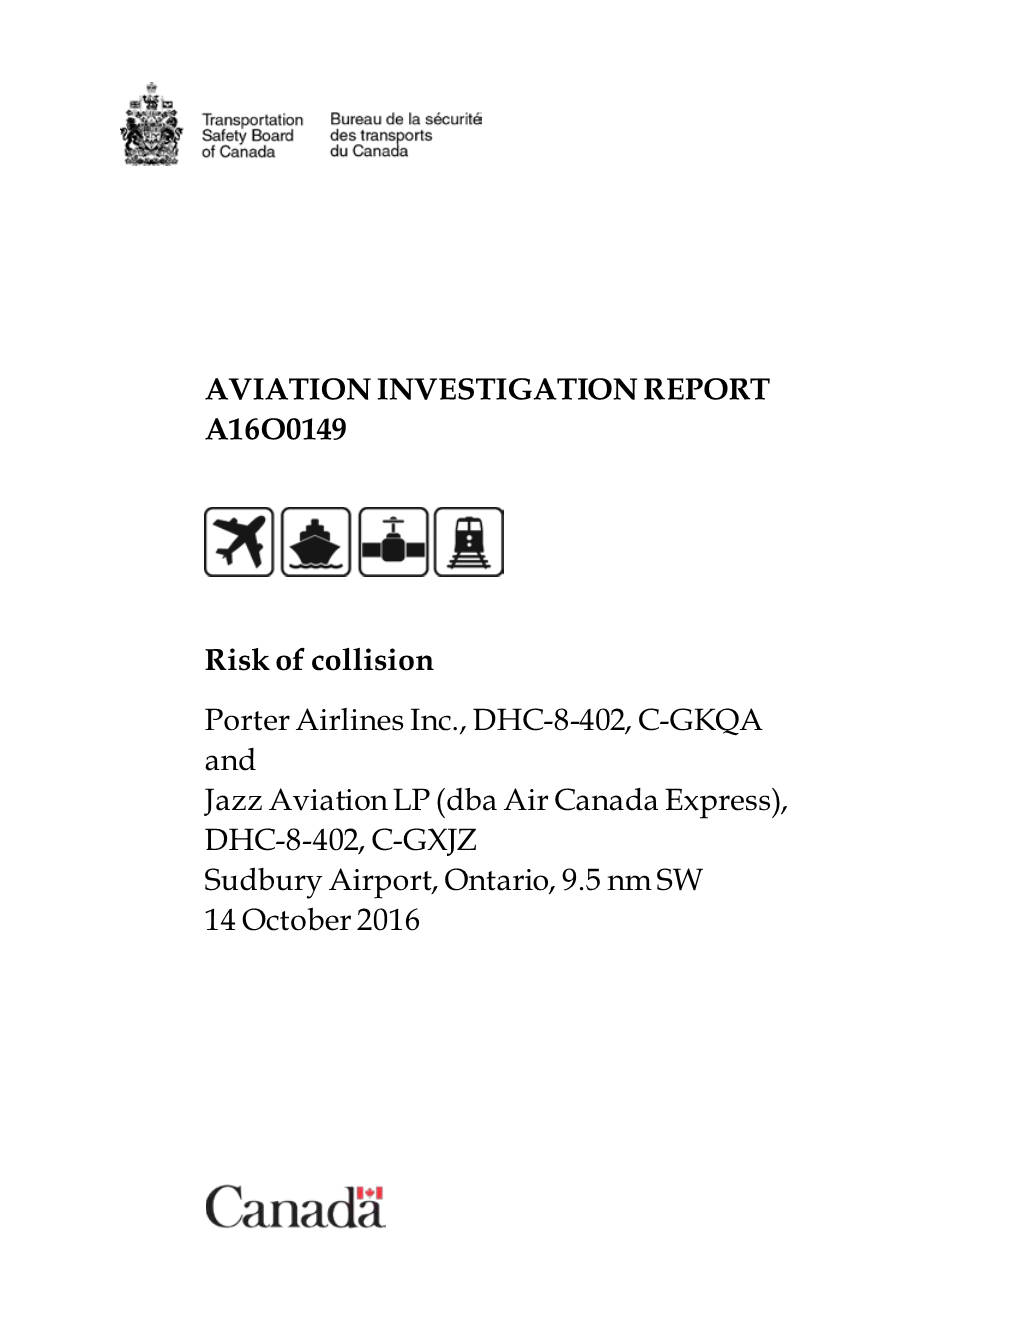 Aviation Investigation Report A16o0149